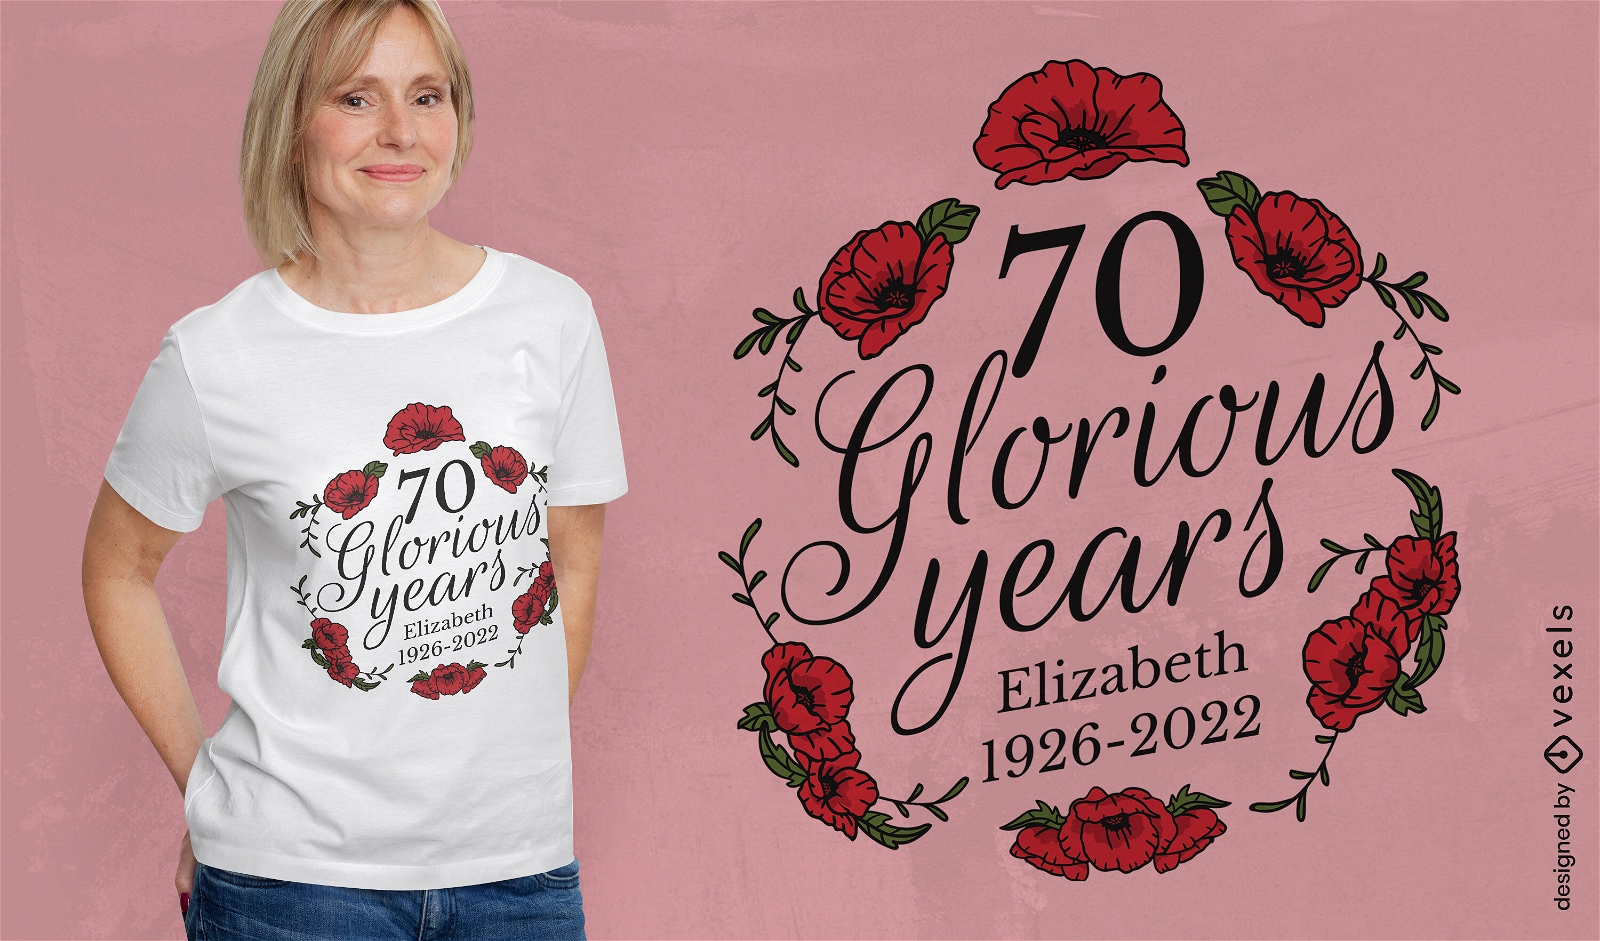 Rose flower memorial t-shirt design